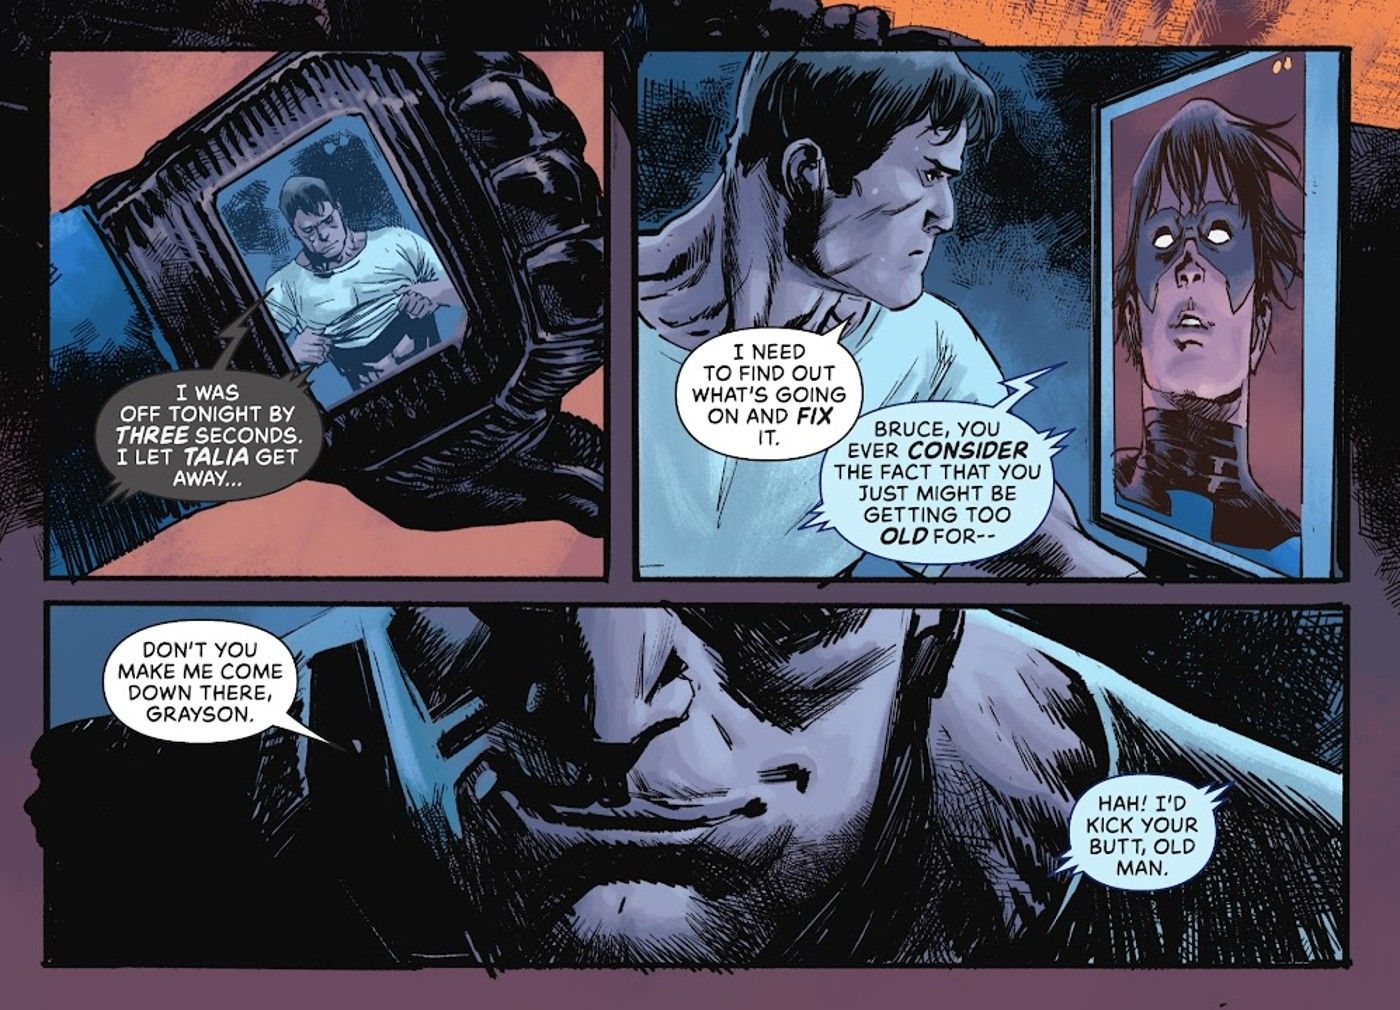 Bruce Wayne and Nightwing Discuss Batman's Age